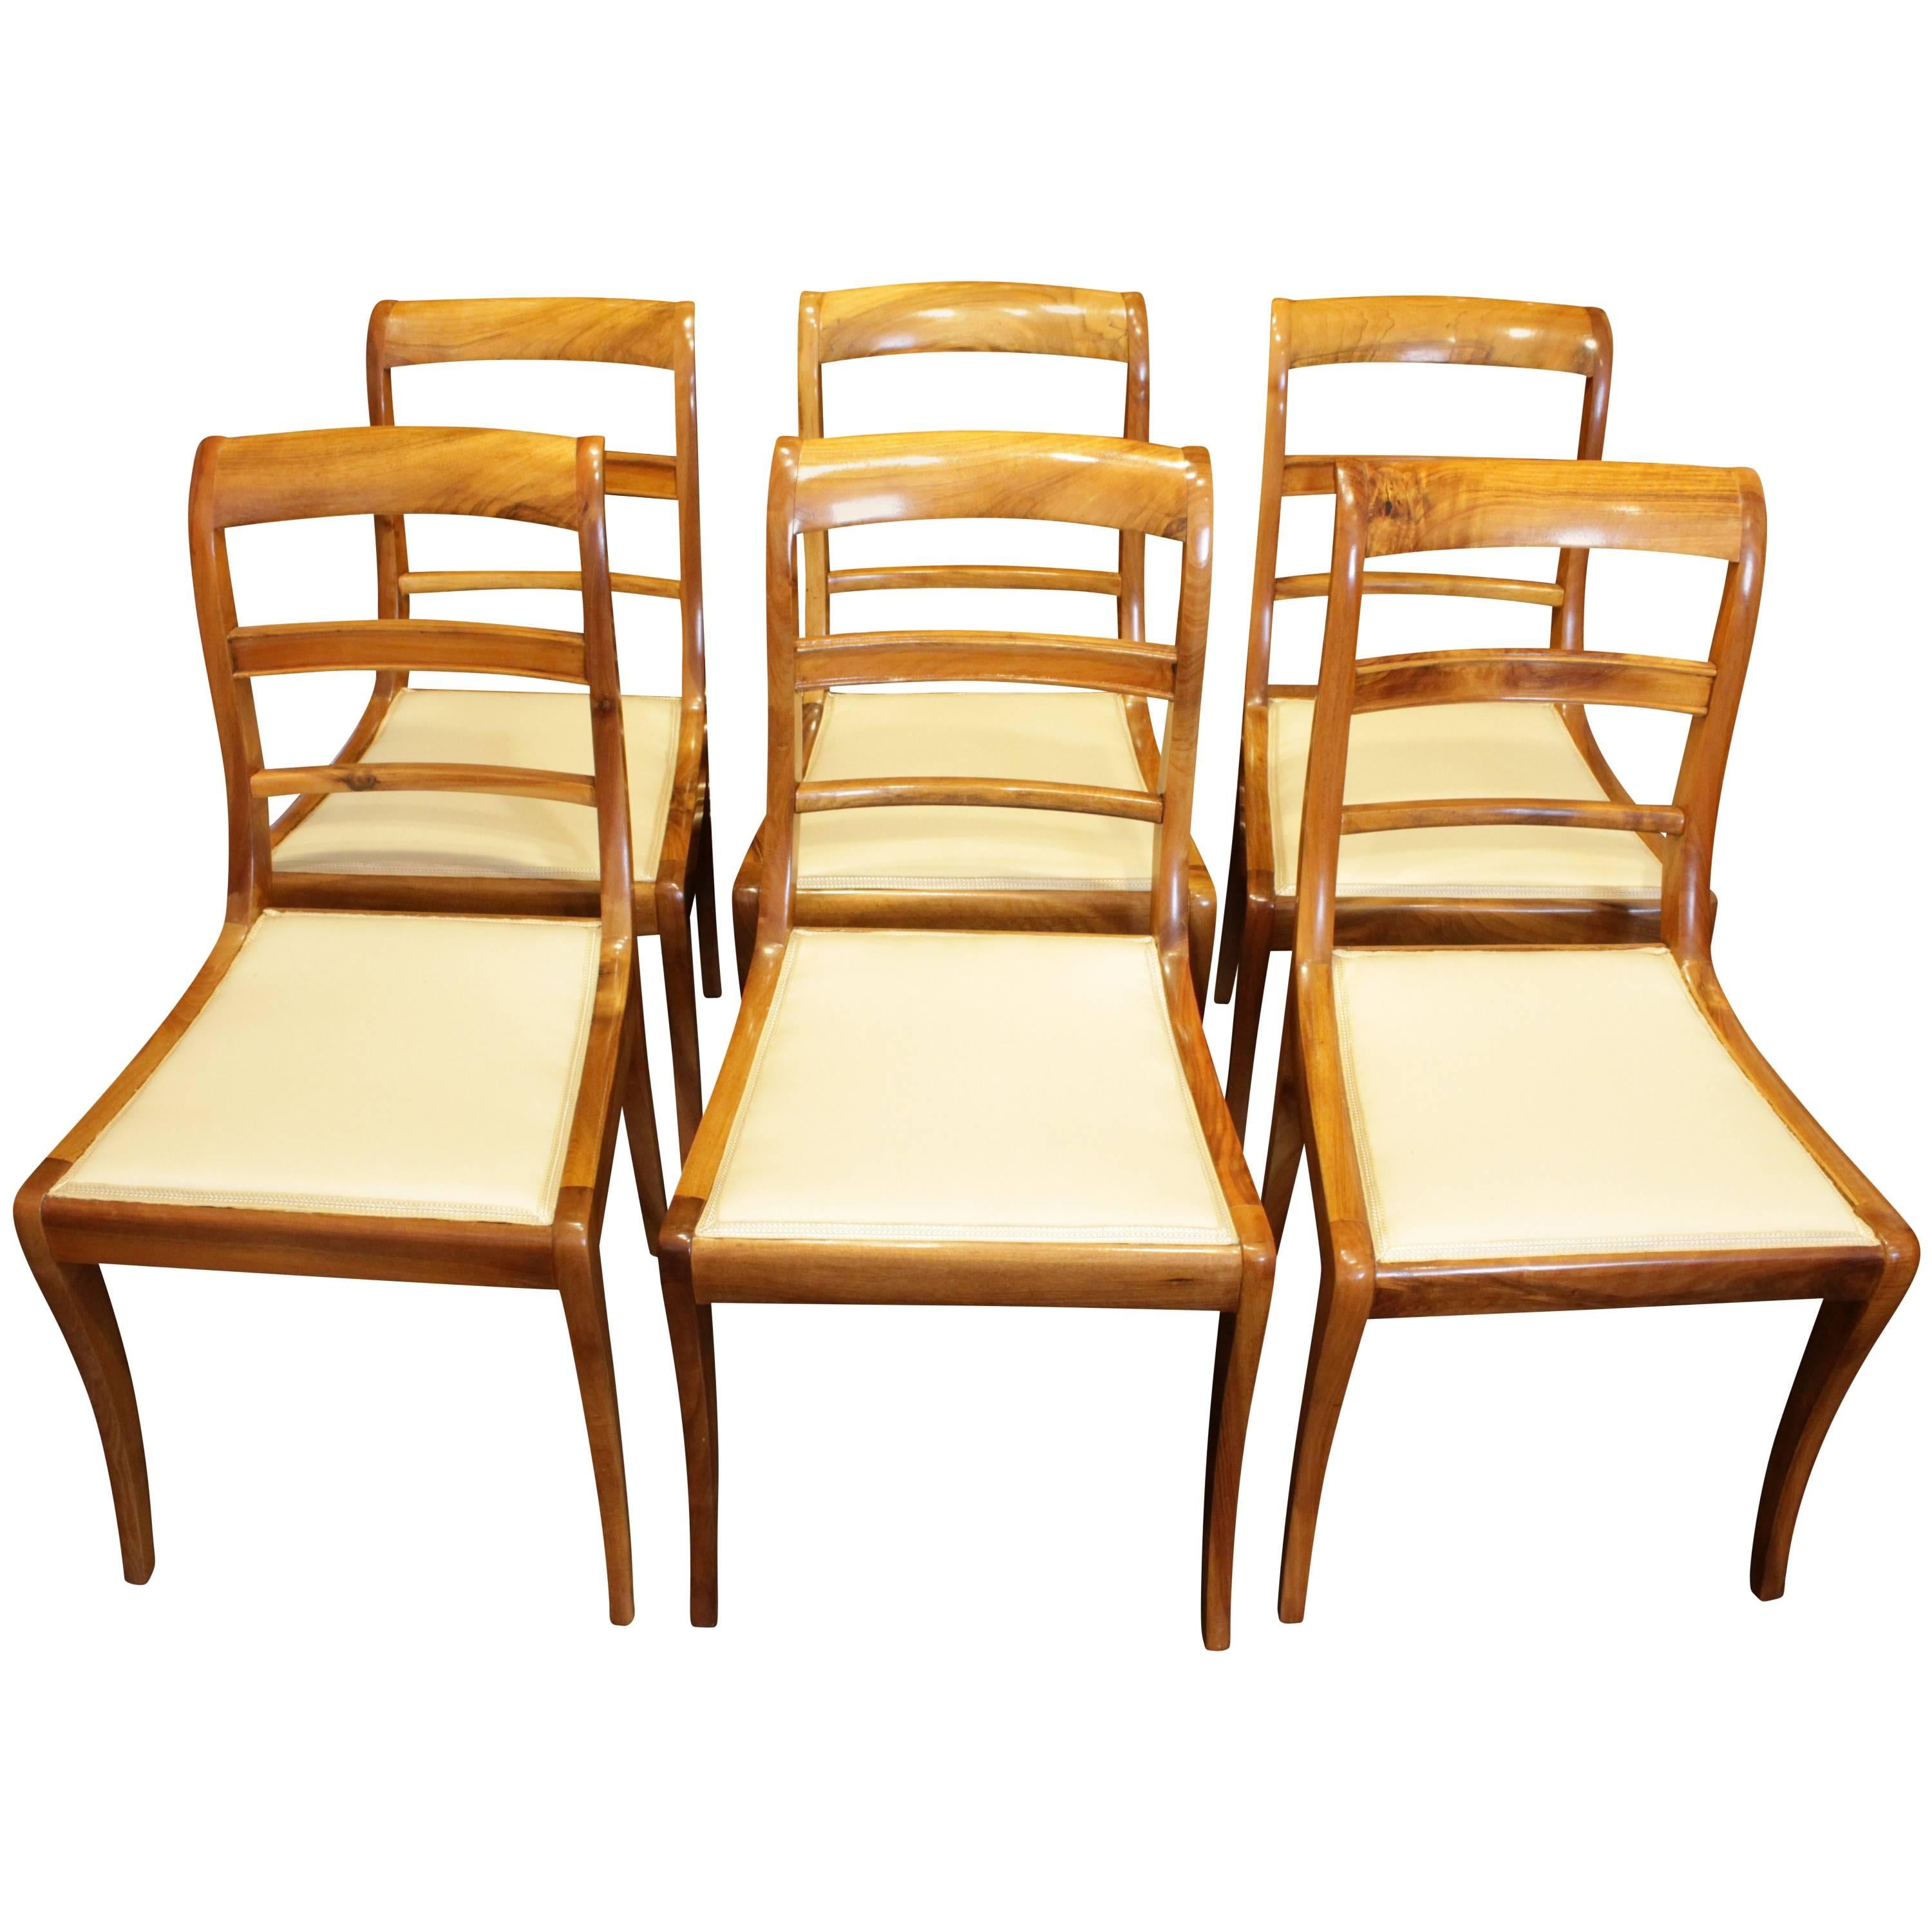 19th Century, Set of Six Solid Walnut Biedermeier Chairs from Germany